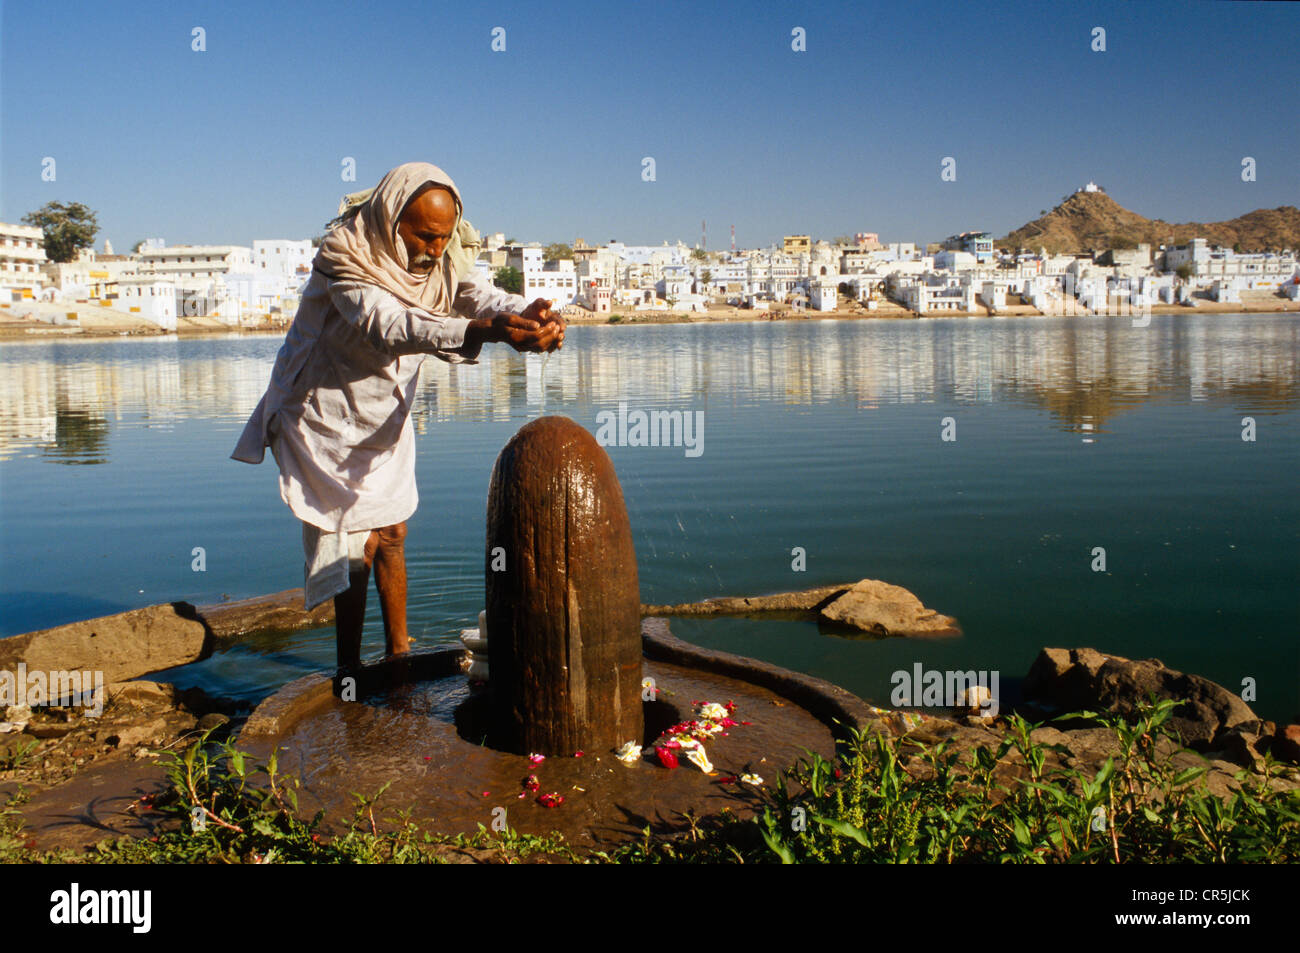 Pilgrim doing morning pooja, offering prayings to Shiva at the Lake of Brahma, Pushkar, Rajasthan, India, Asia Stock Photo